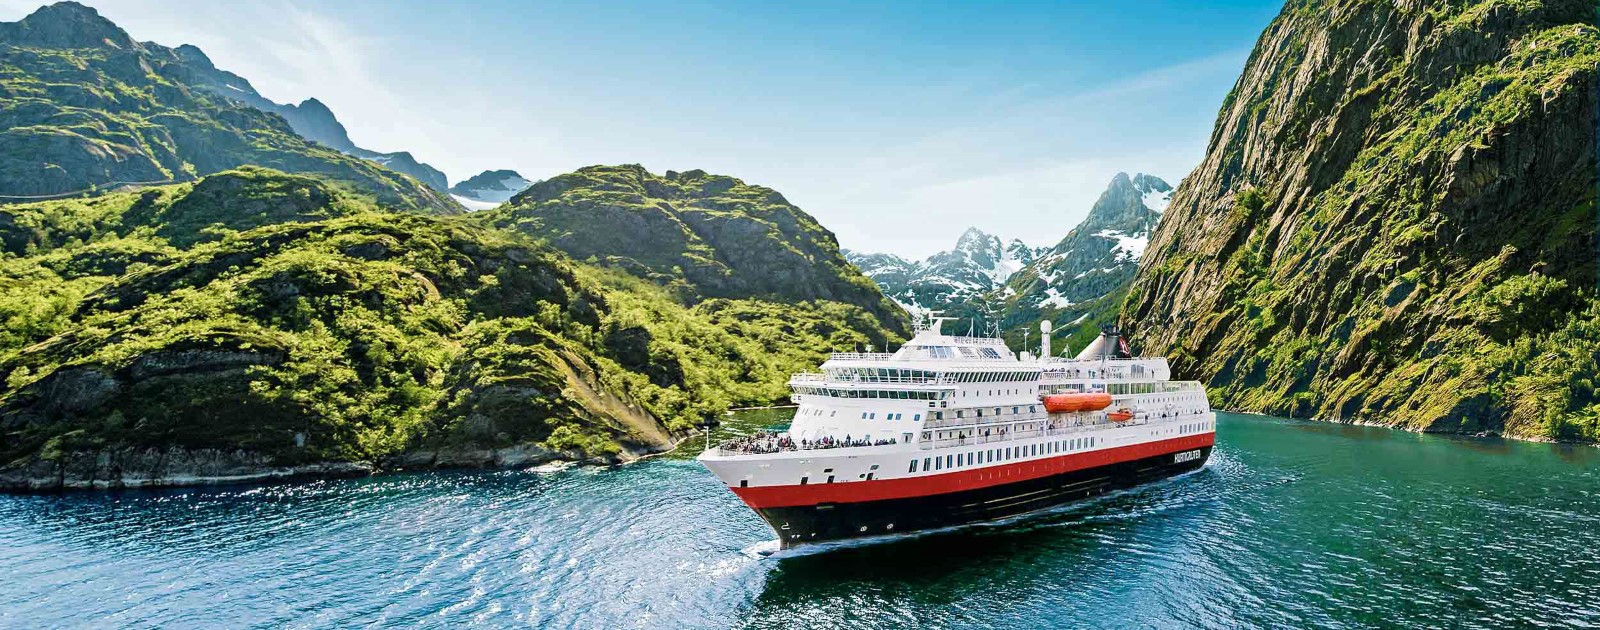 5 day norwegian fjord cruise